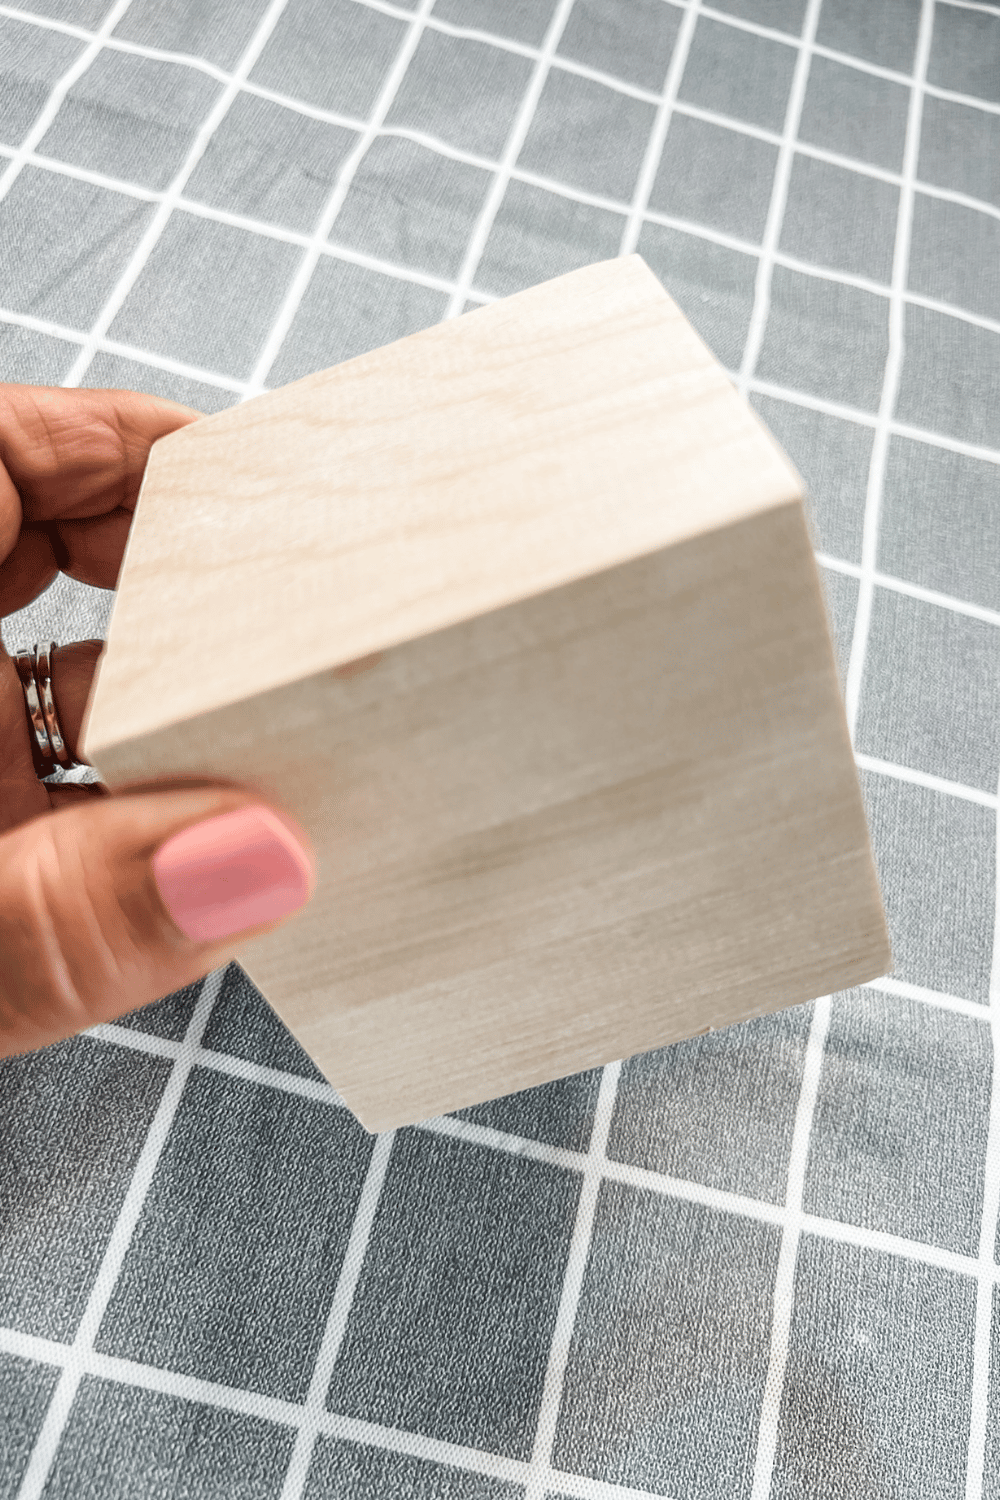 Wood cube craft idea 